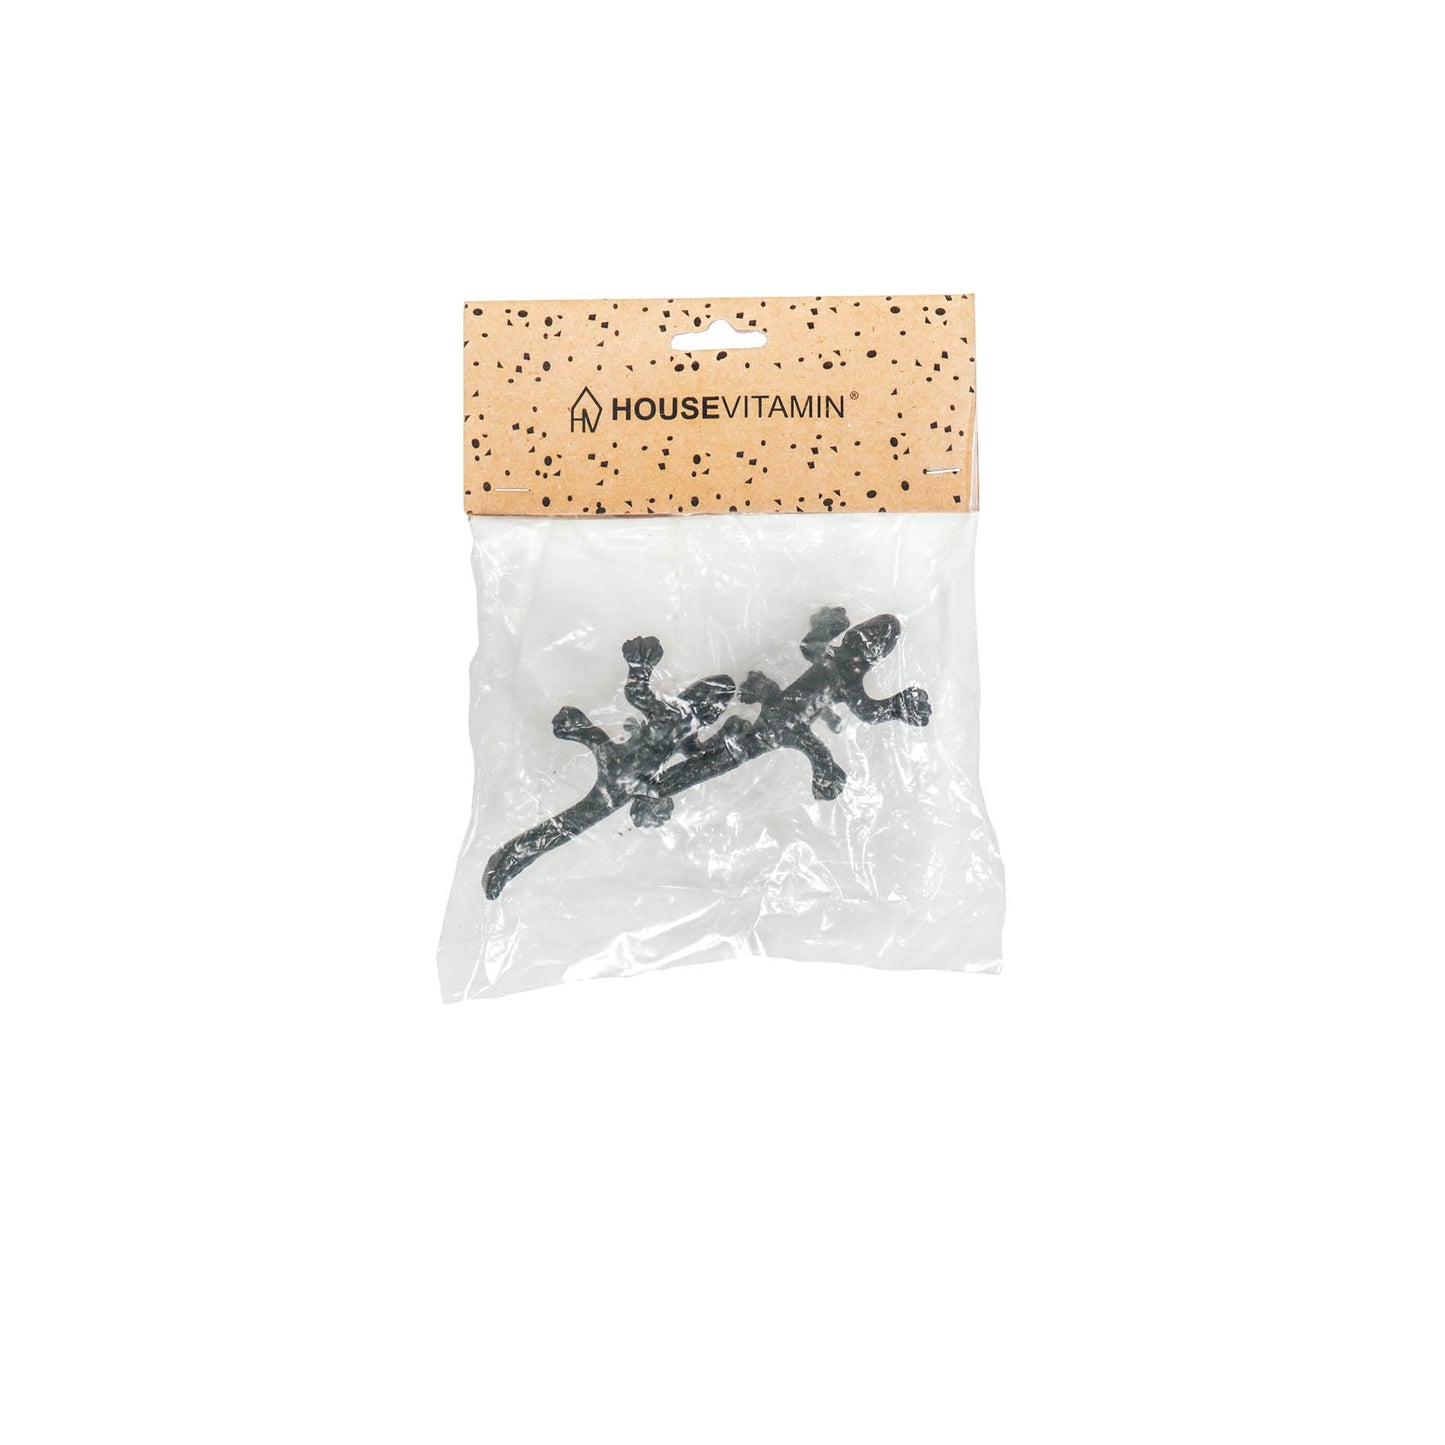 Housevitamin Candle pins - Salamander - Black - Set of 2 - 8x4x1cm